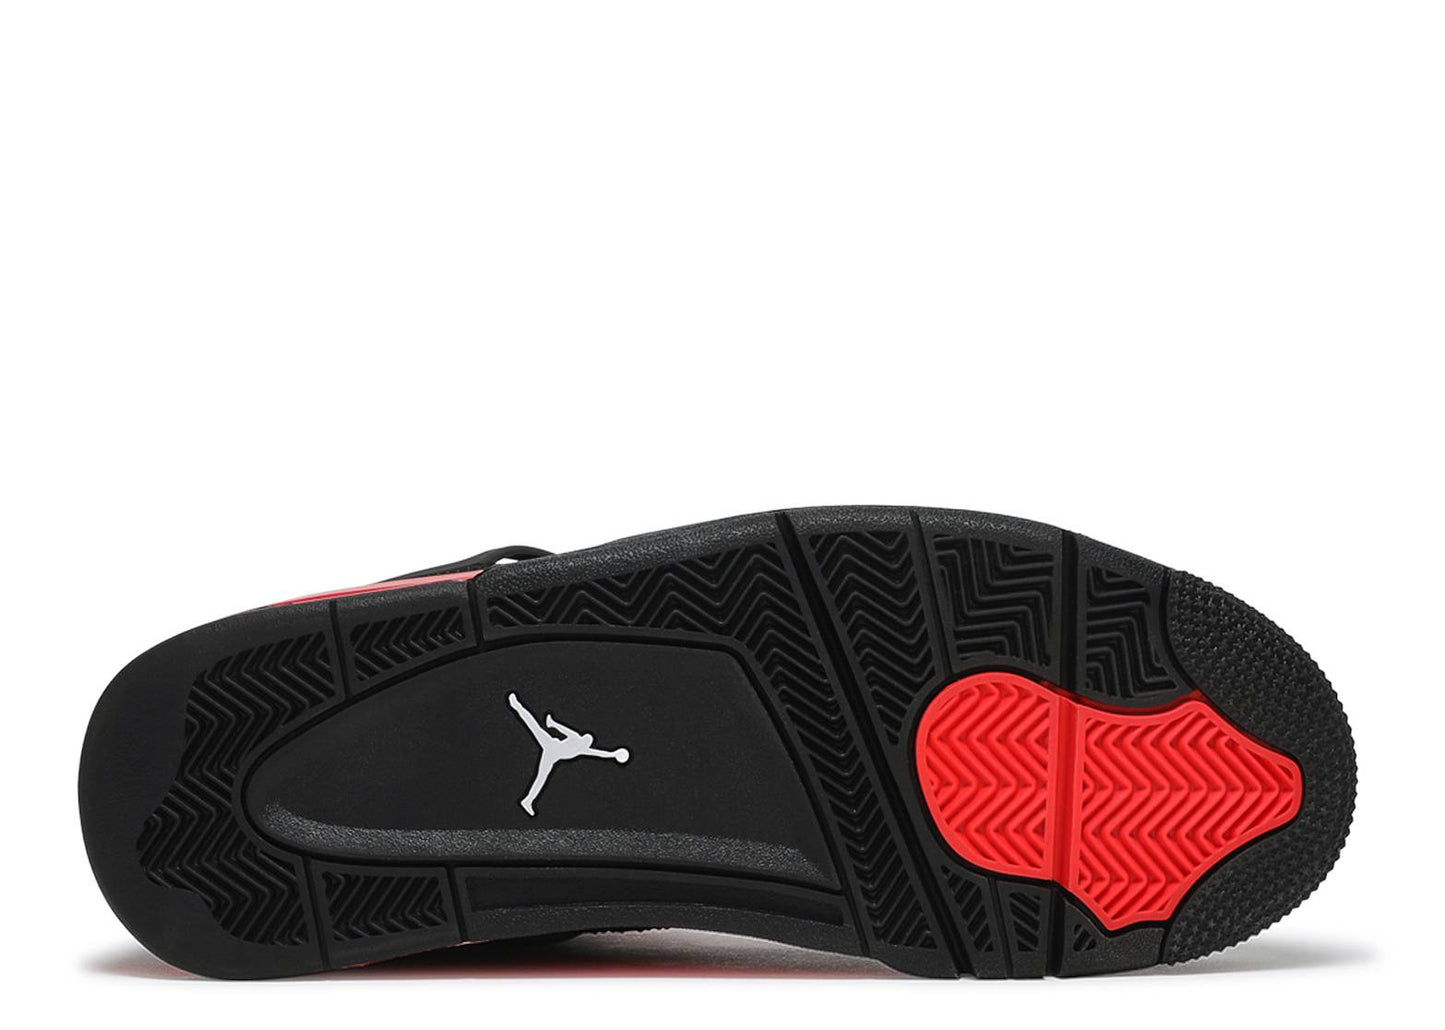 Air Jordan 4 Retro "Red Thunder"